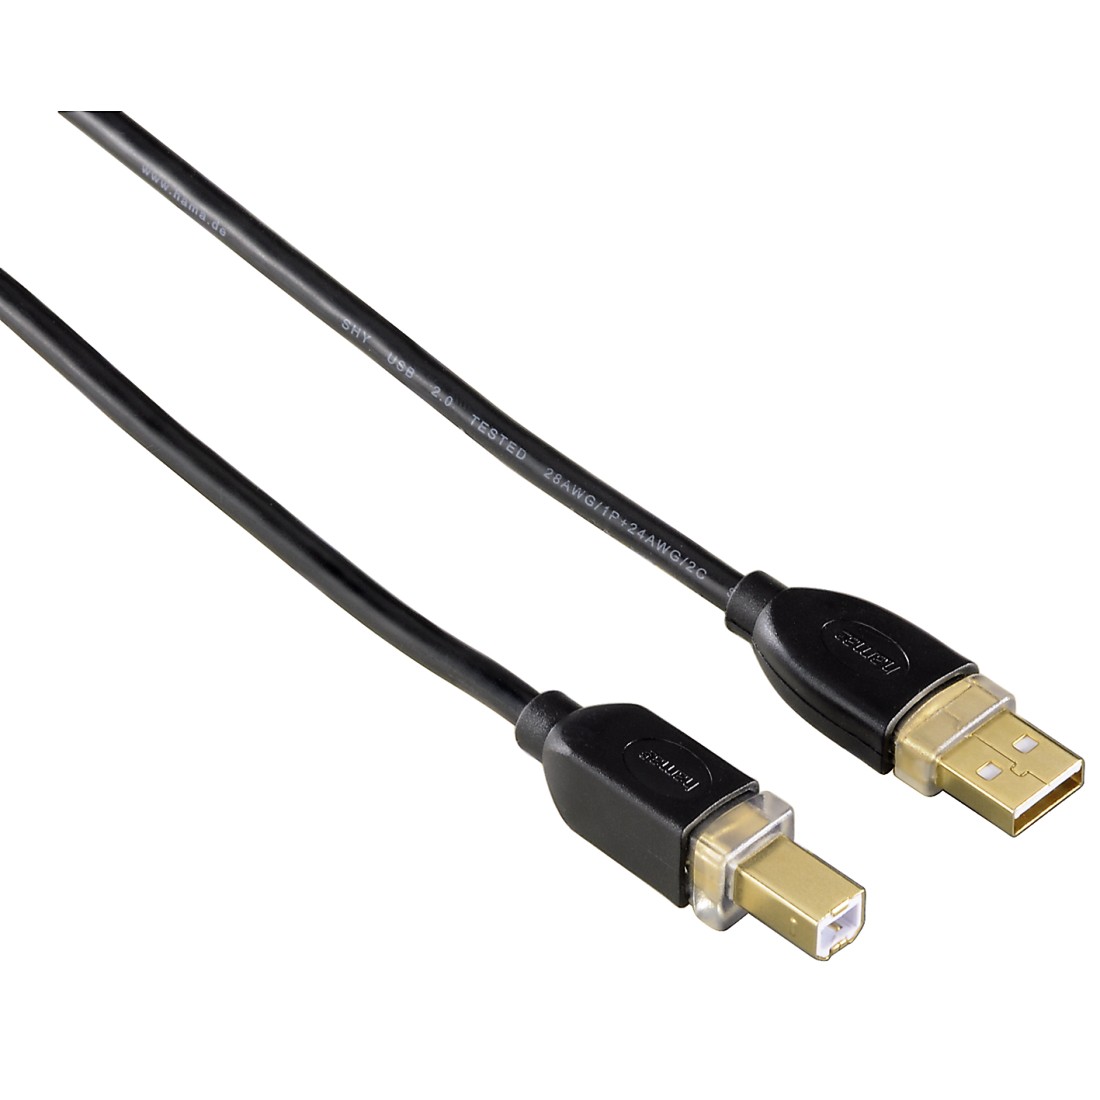 USB 2.0 Cable, verguld, afgeschermd, m, zwart | Hama